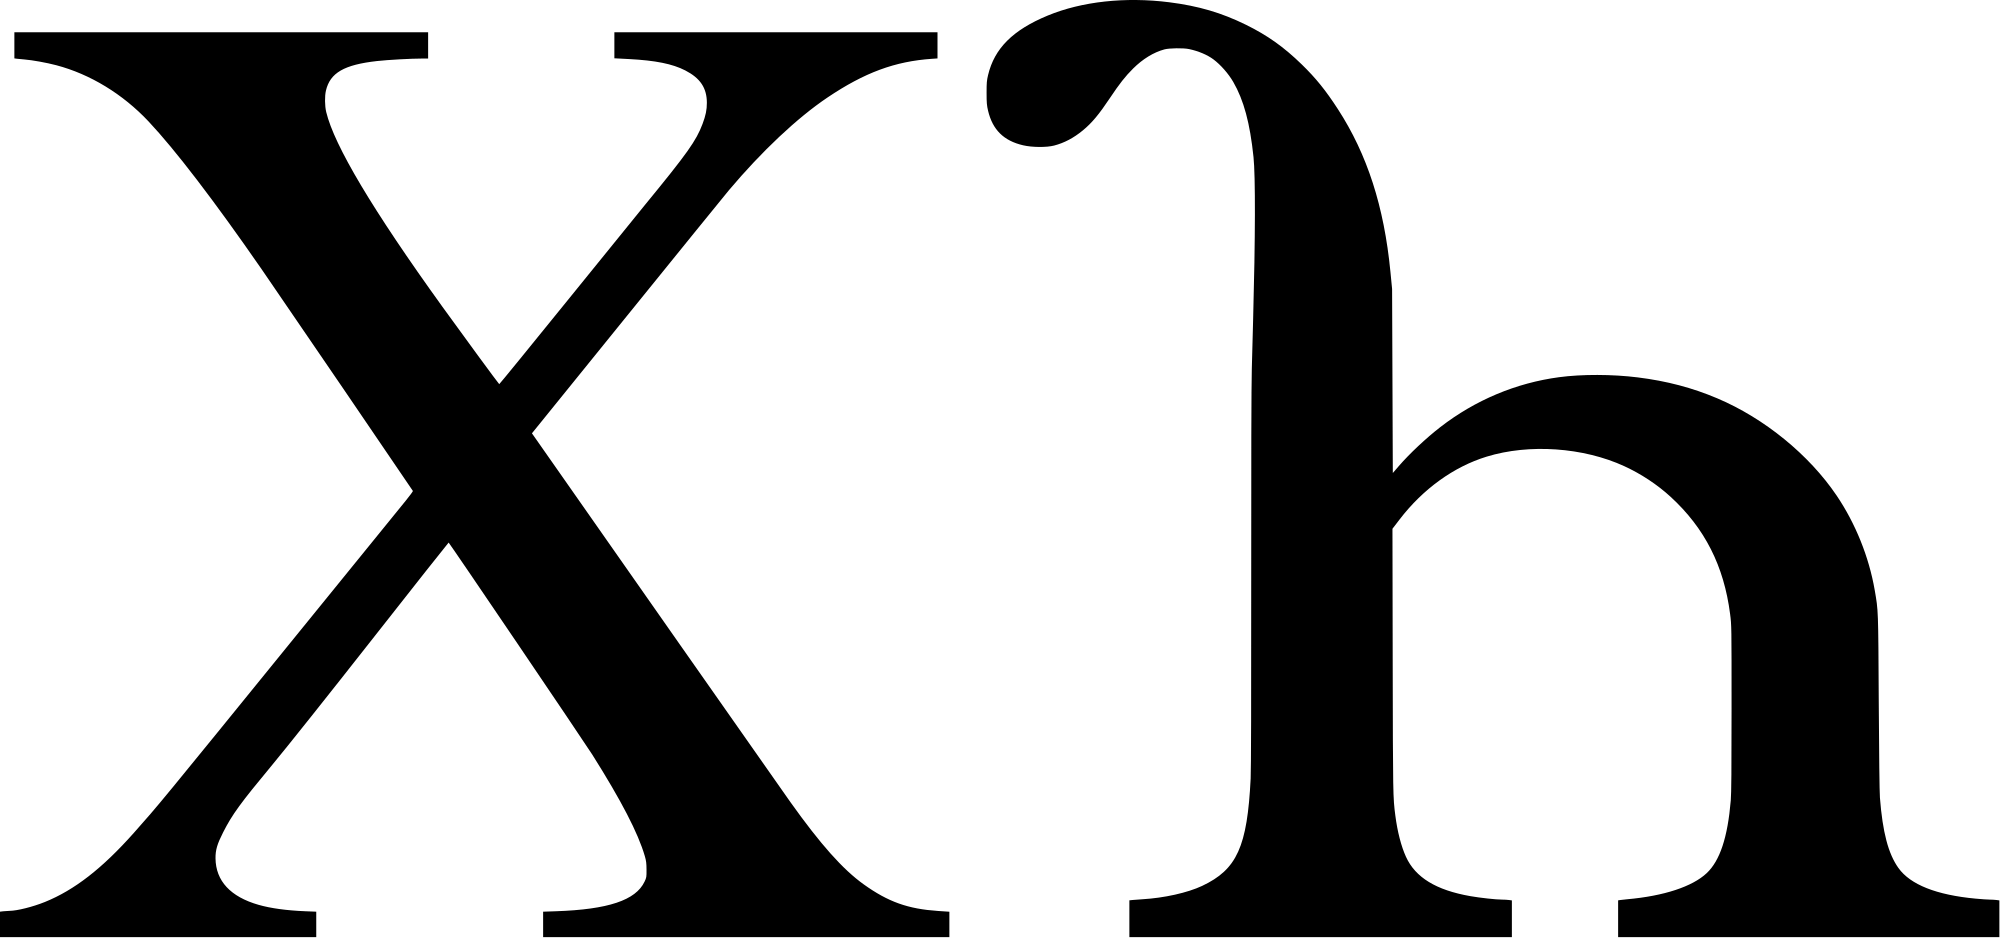 Vector Black And White File Latin Capital Digraph X - Theta Chi Flag (2000x938)